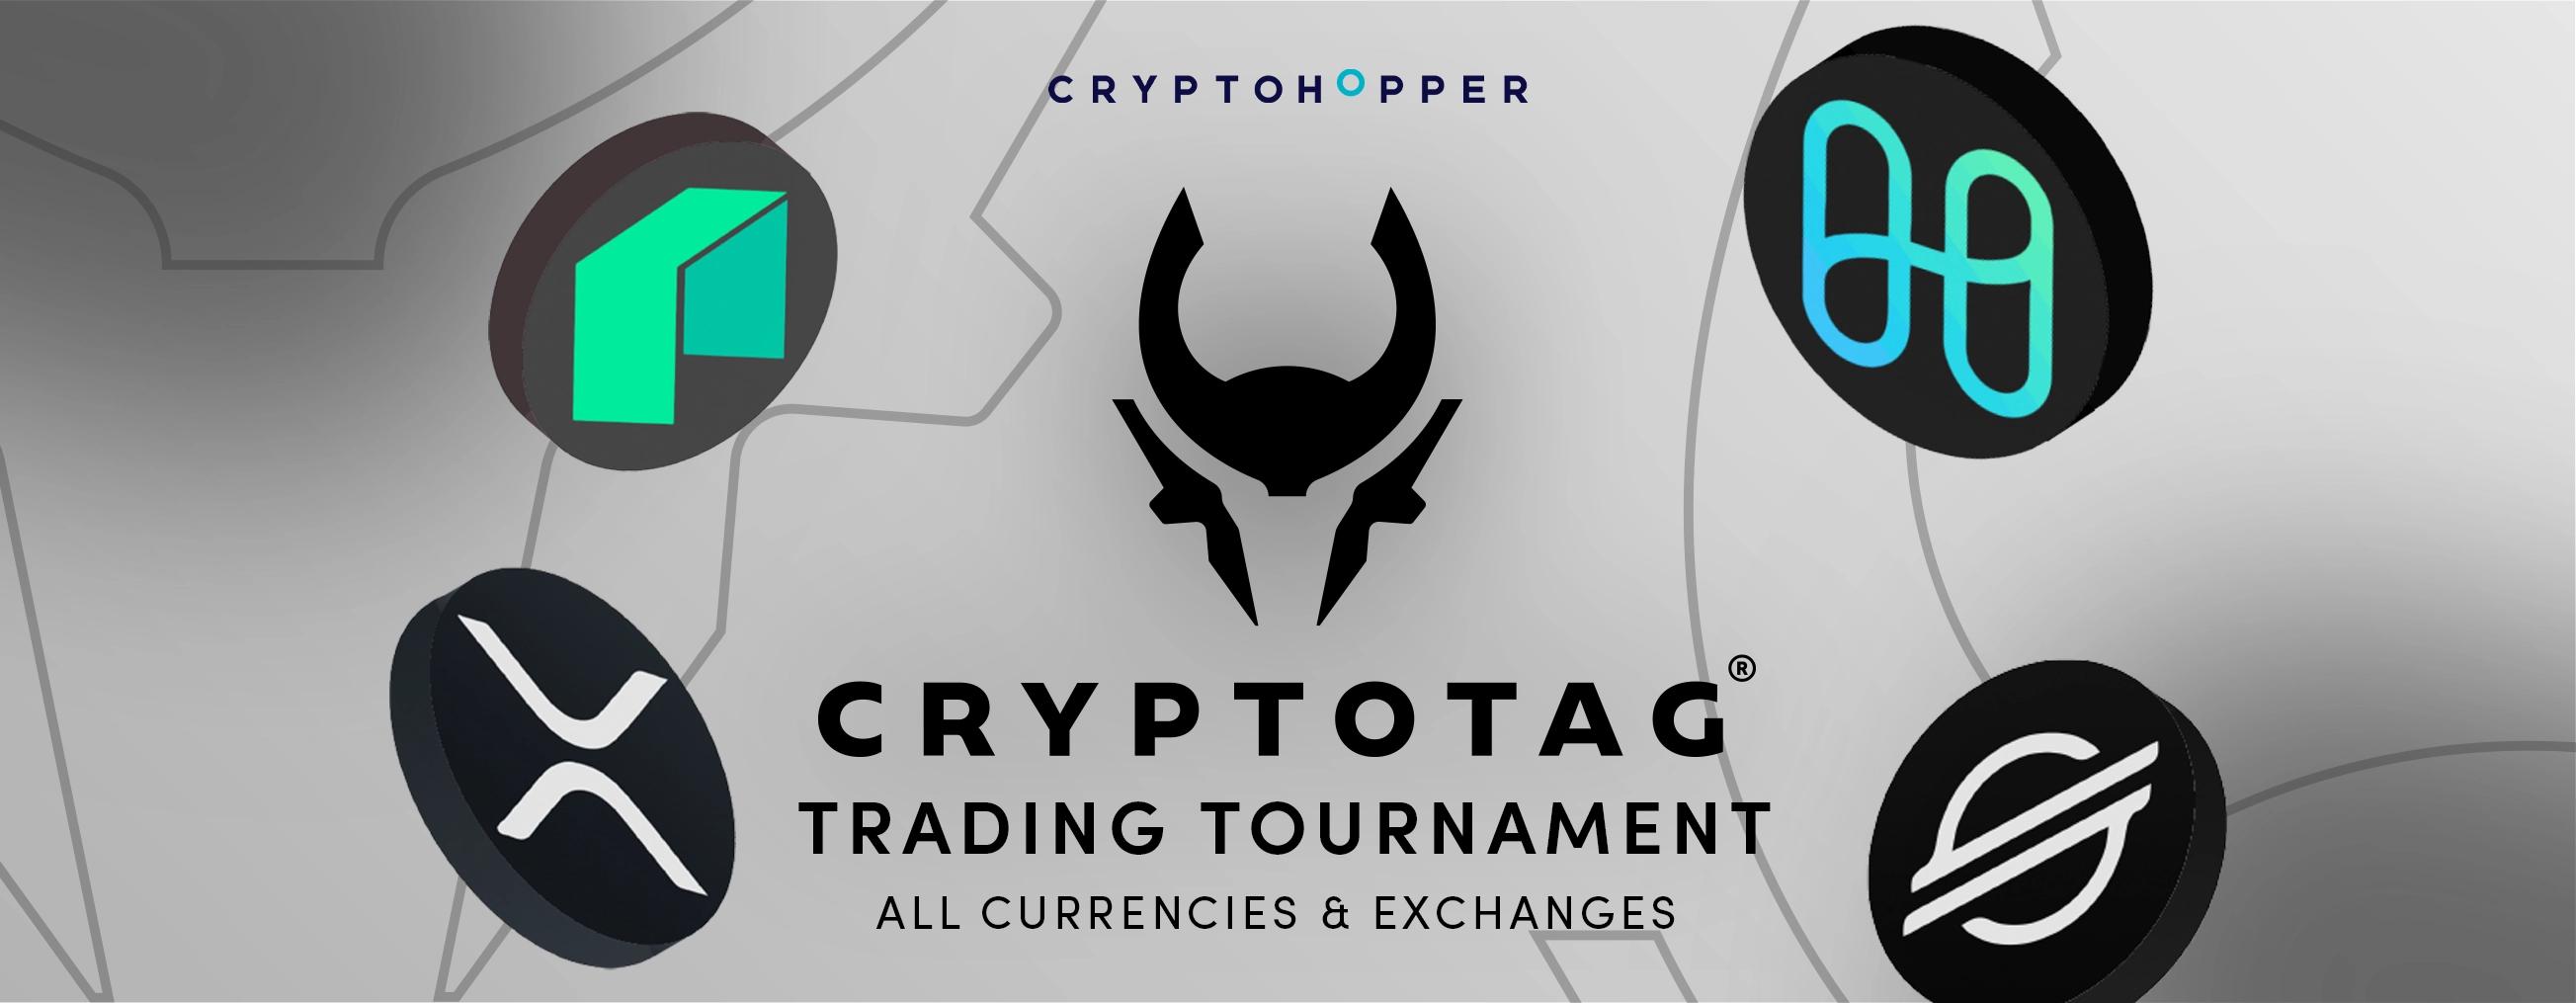 Cryptotag Trading Tournament 